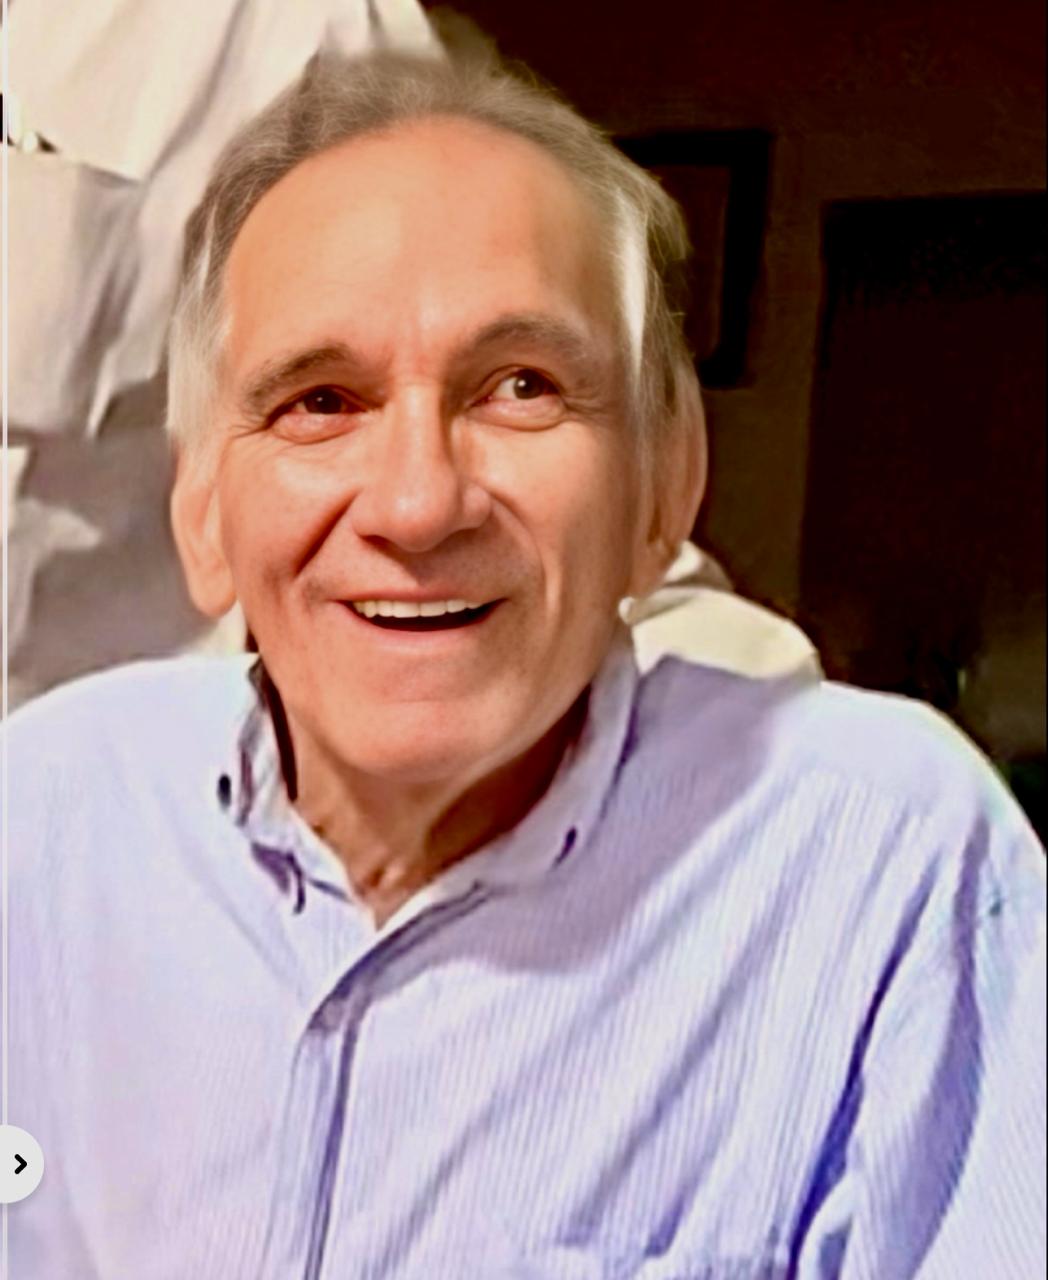 Gerardo Felipe Villareal Zuñiga